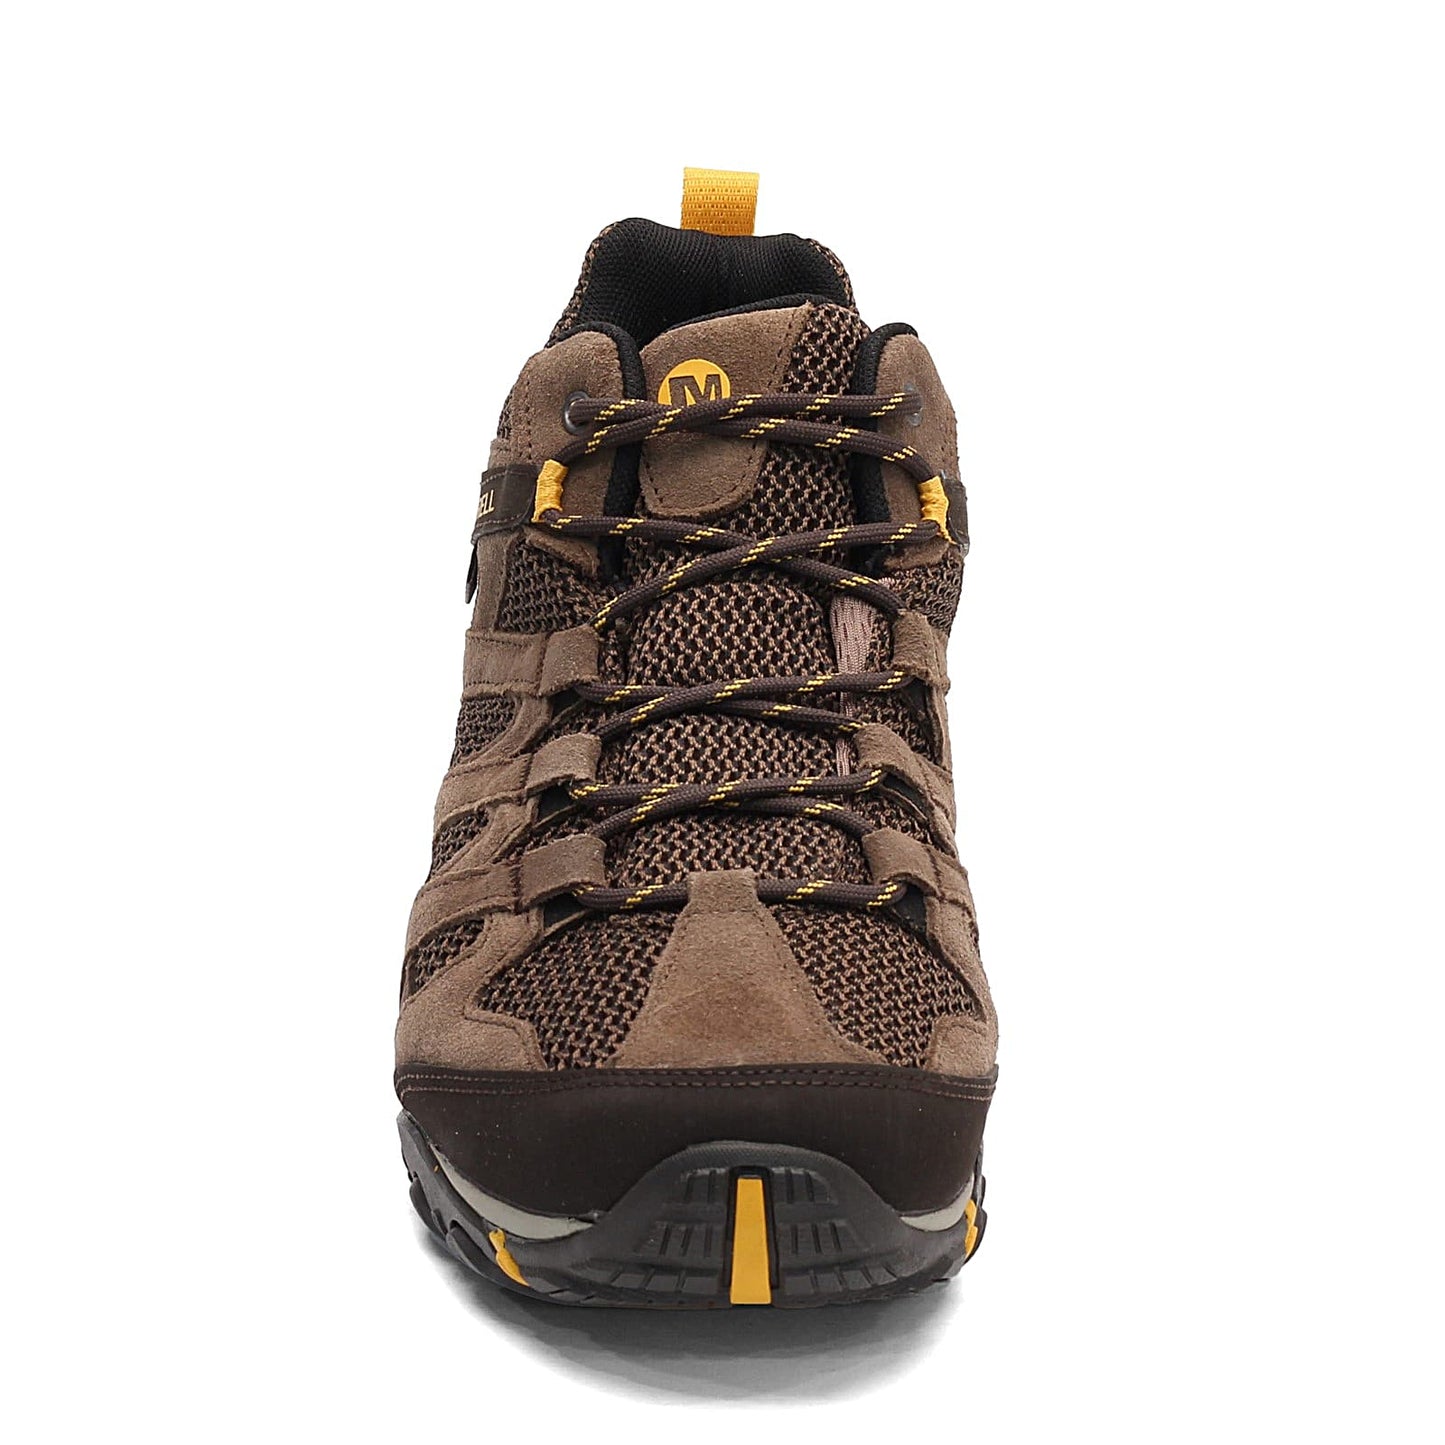 Peltz Shoes  Men's Merrell Alverstone Mid Hiking Boot - Wide Width